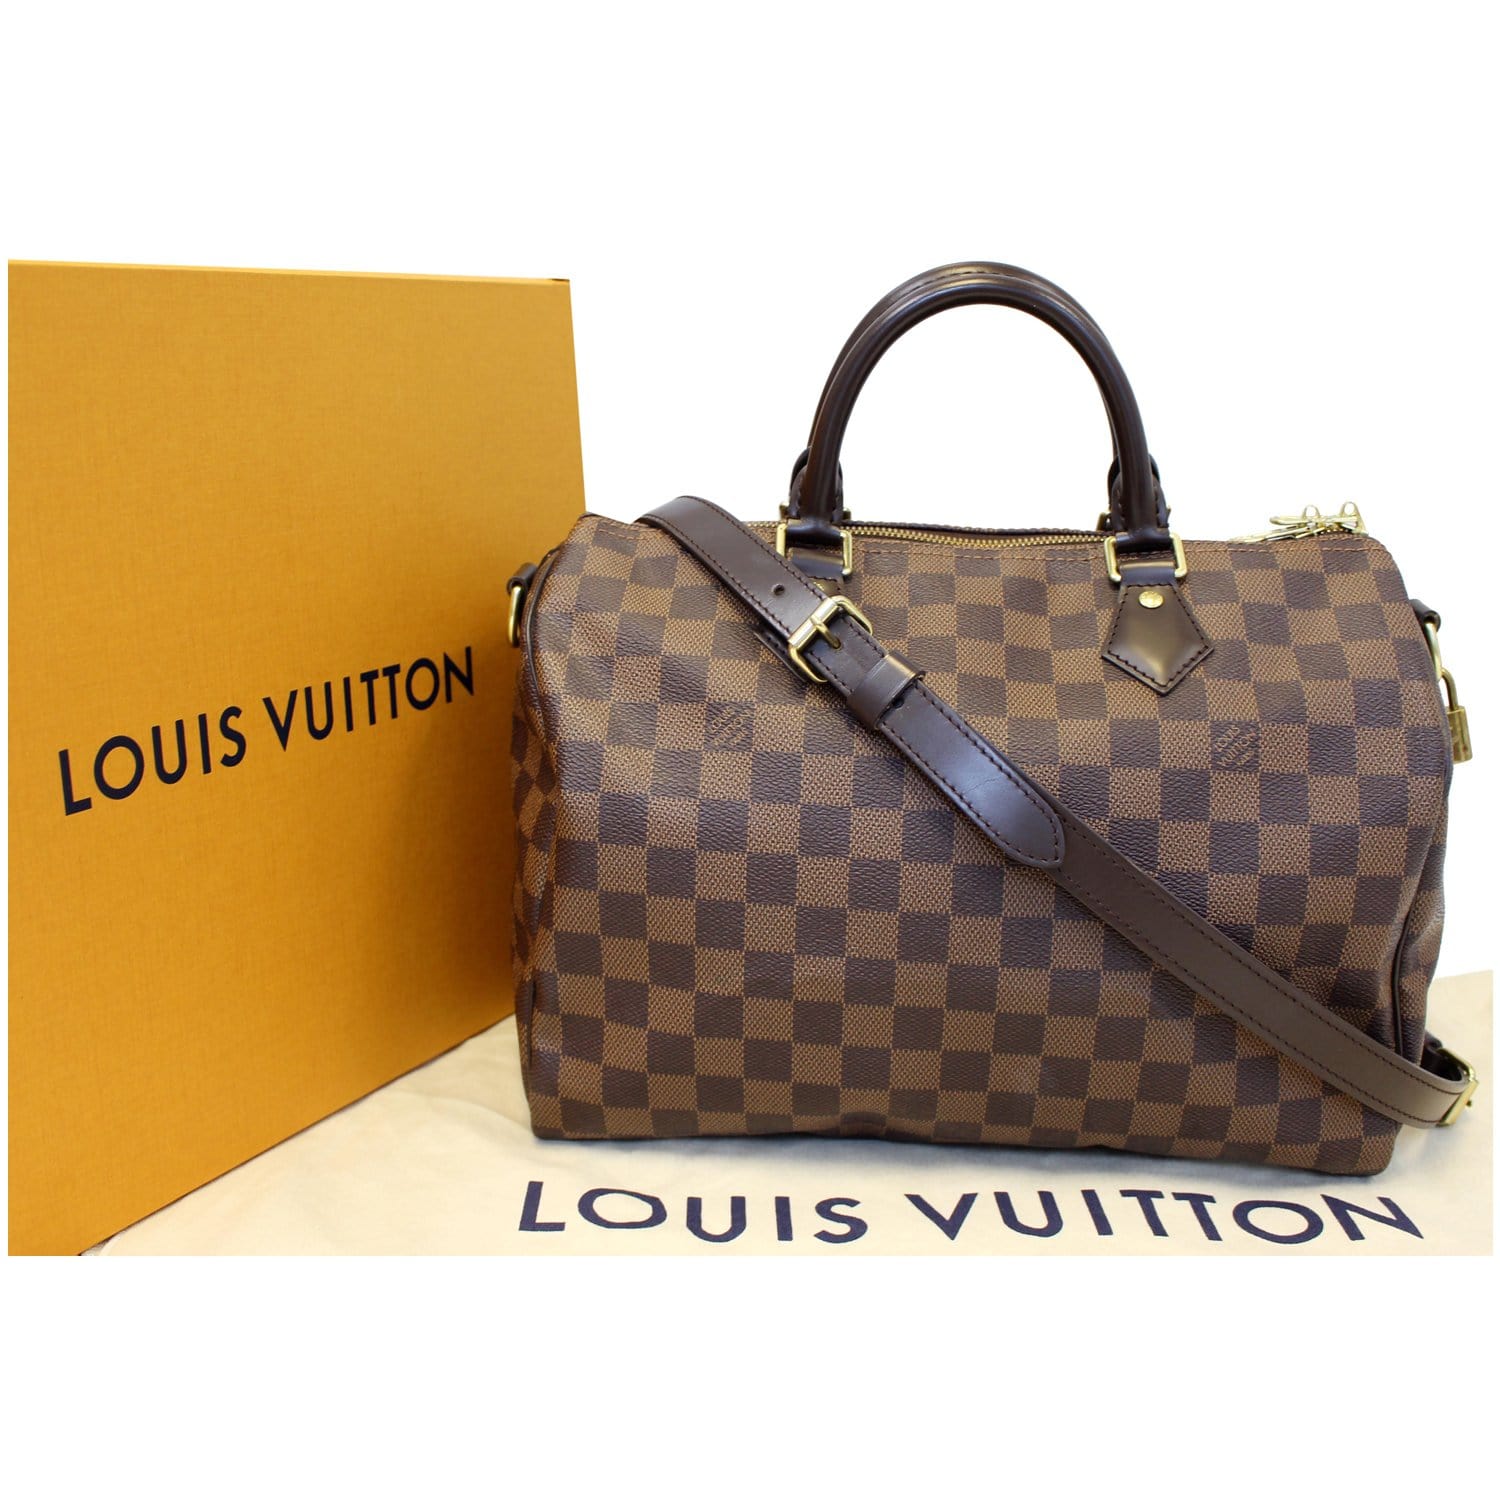 Authentic Louis Vuitton Speedy Bandouliere 30 in Damier Ebene